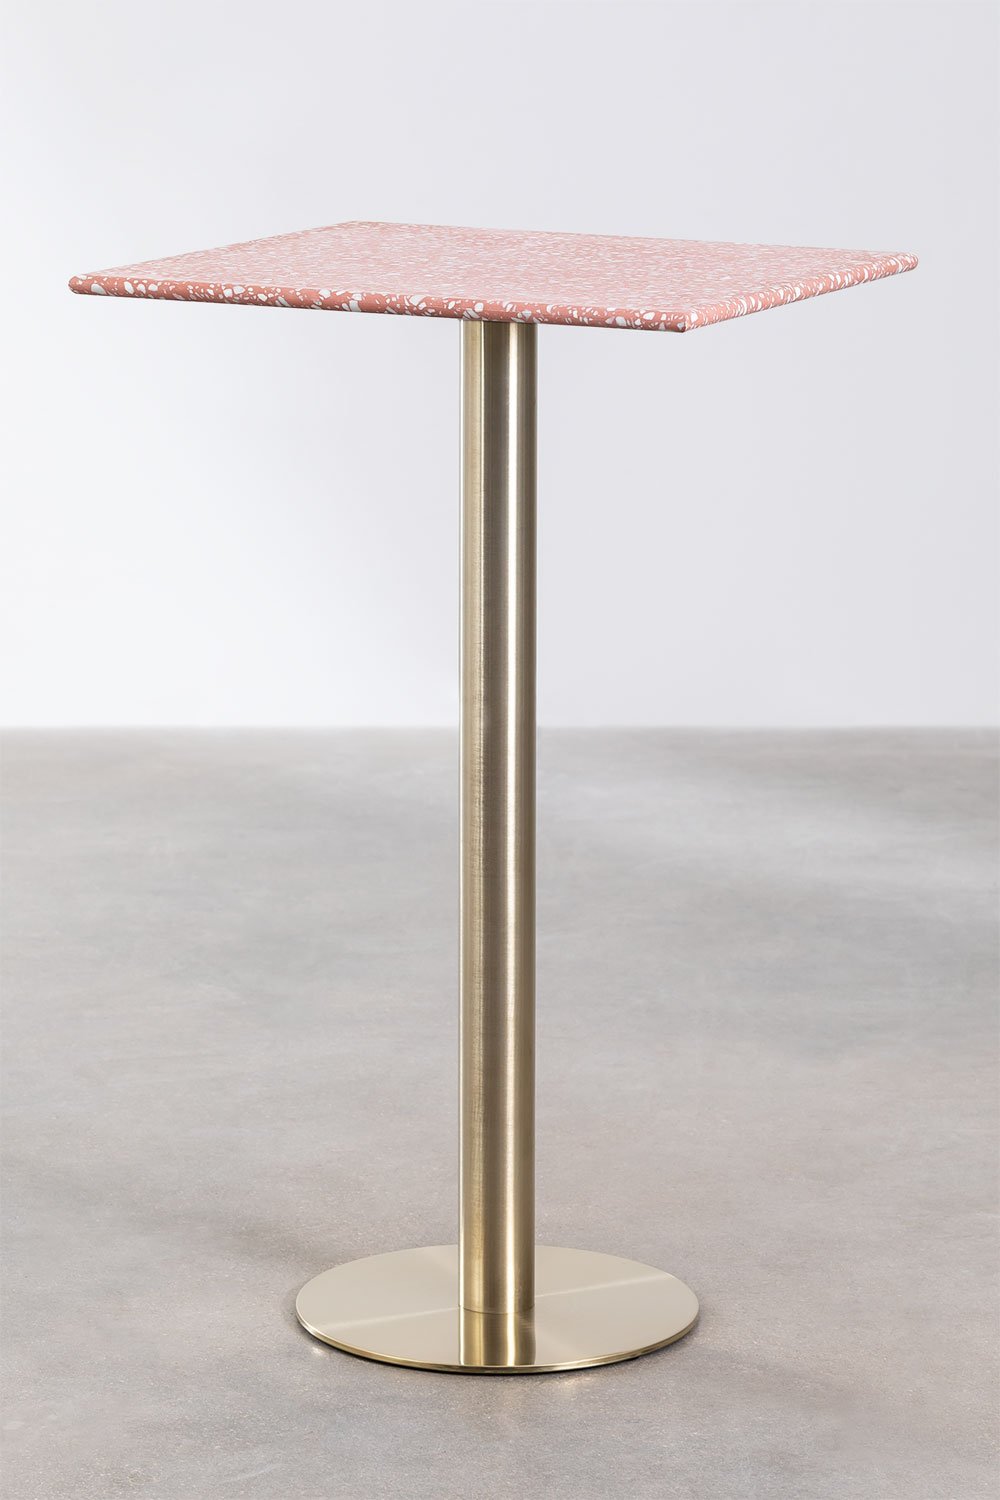 Table Haute de Bar Carrée en Terrazzo (60x60 cm) Malibu, image de la galerie 1